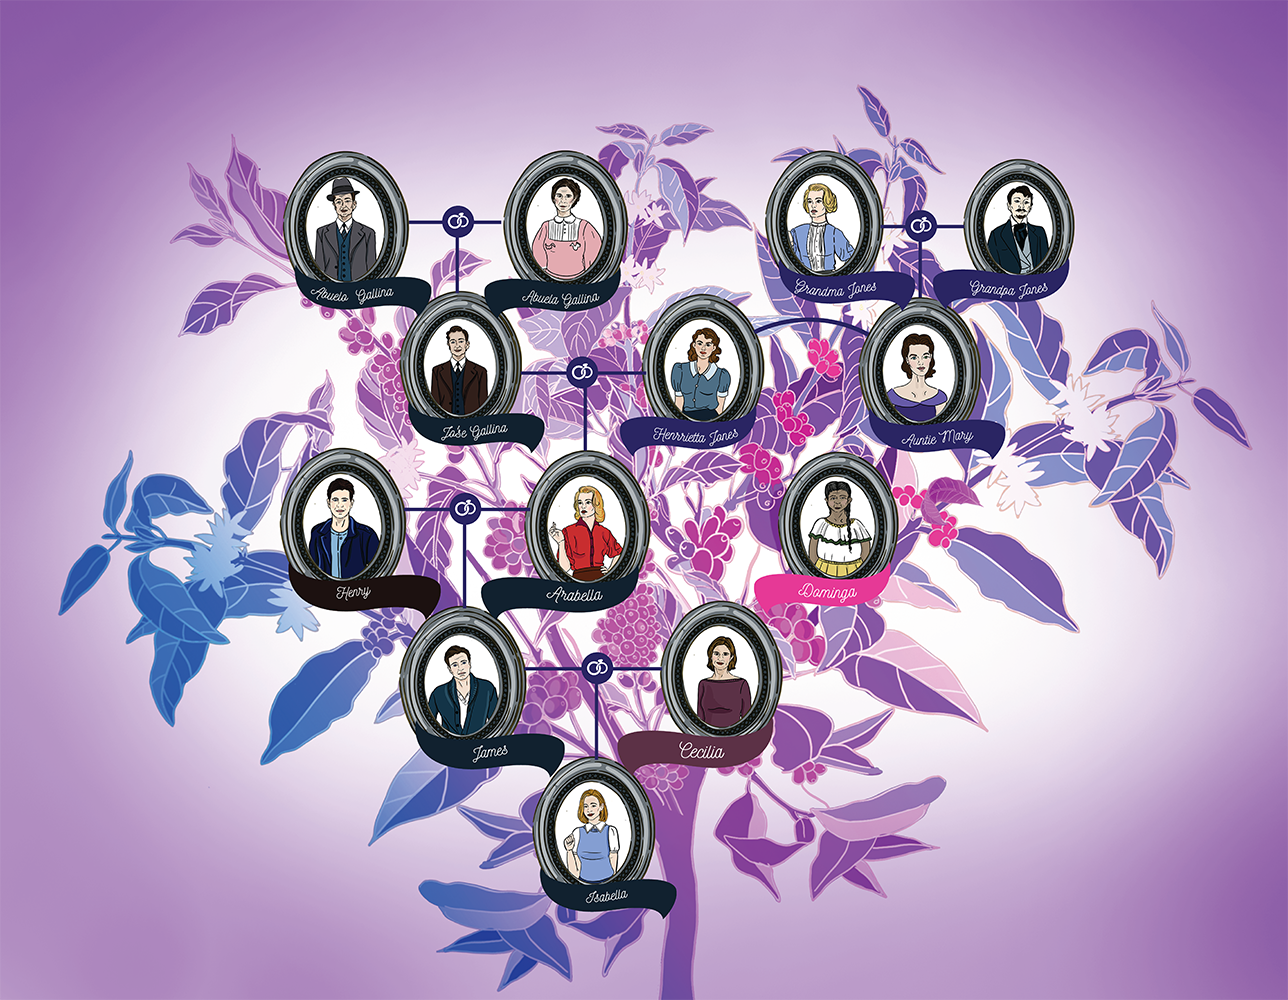 amelia earhart family tree